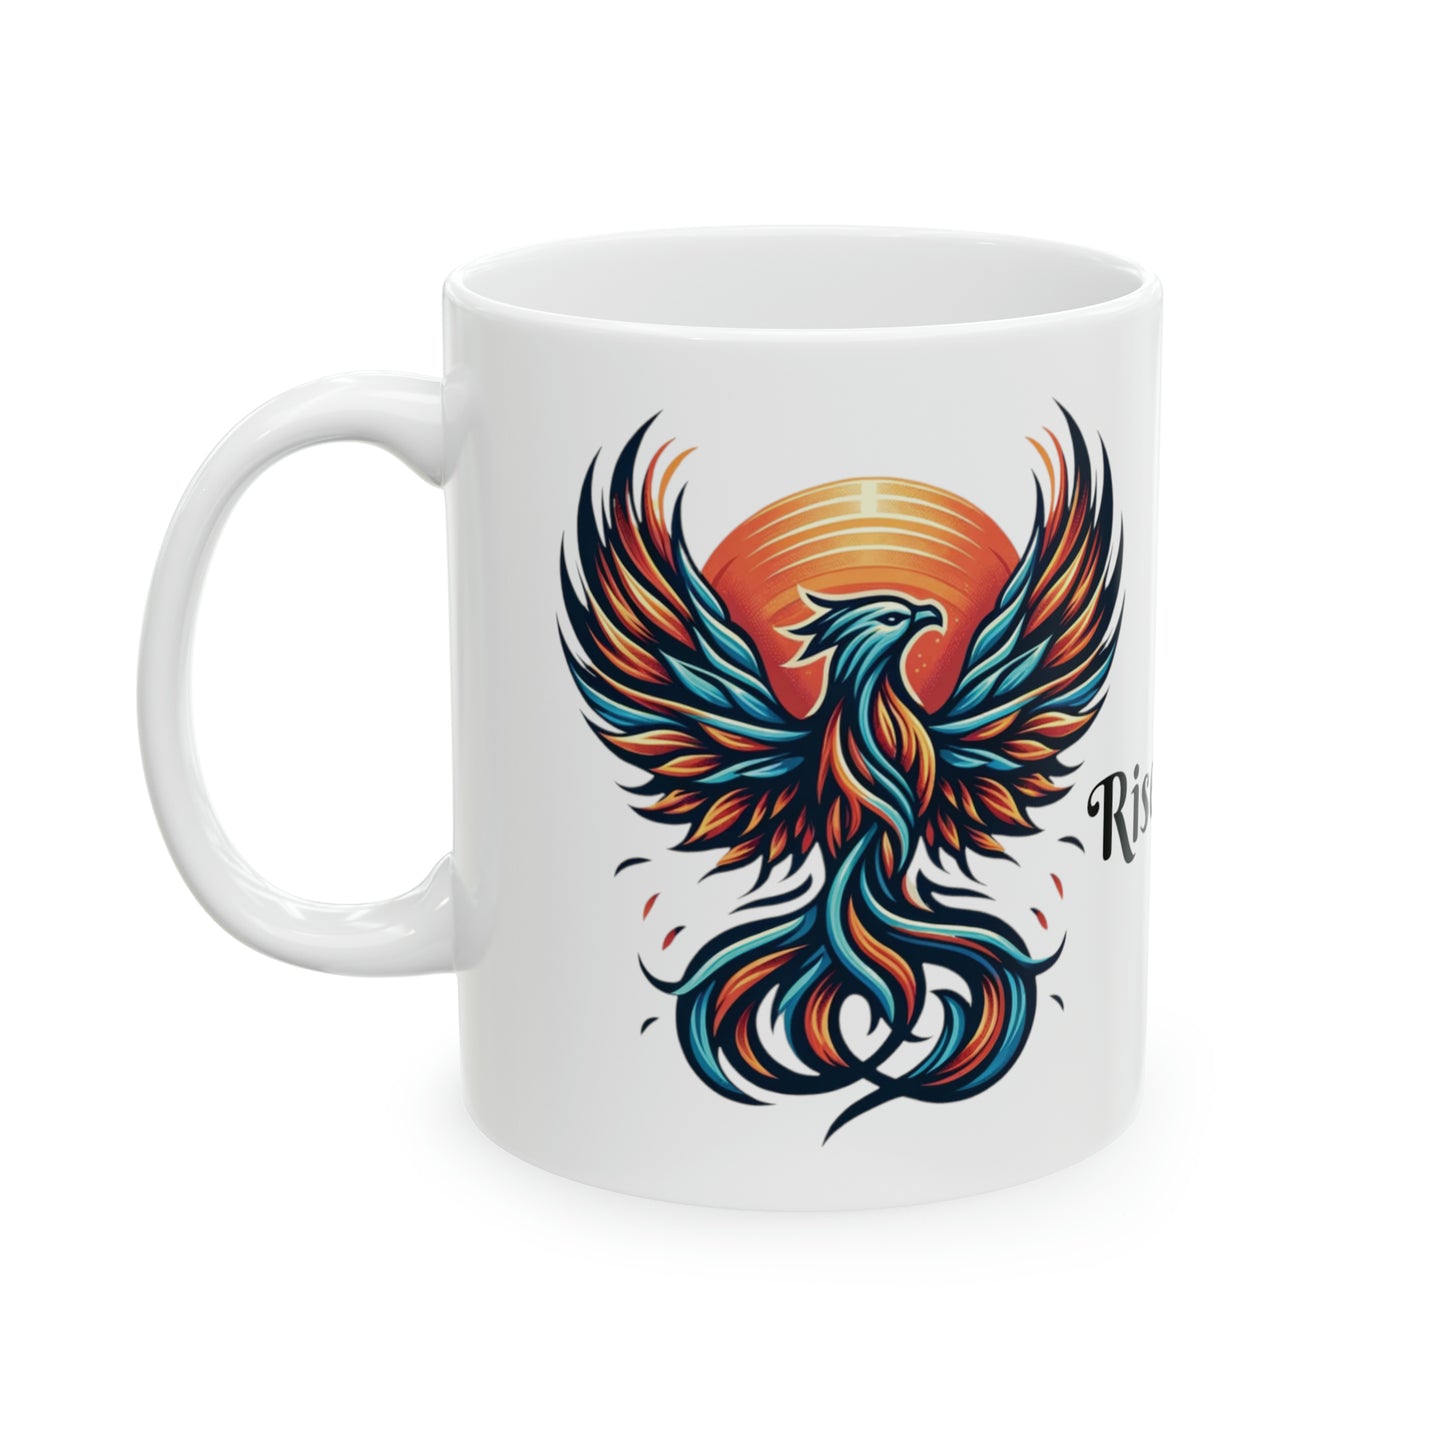 Phoenix Dawn Coffee Mug: "Rise Again" with Every Sip | Ceramic Mug, 11oz | Custom Design Not Sold In Stores